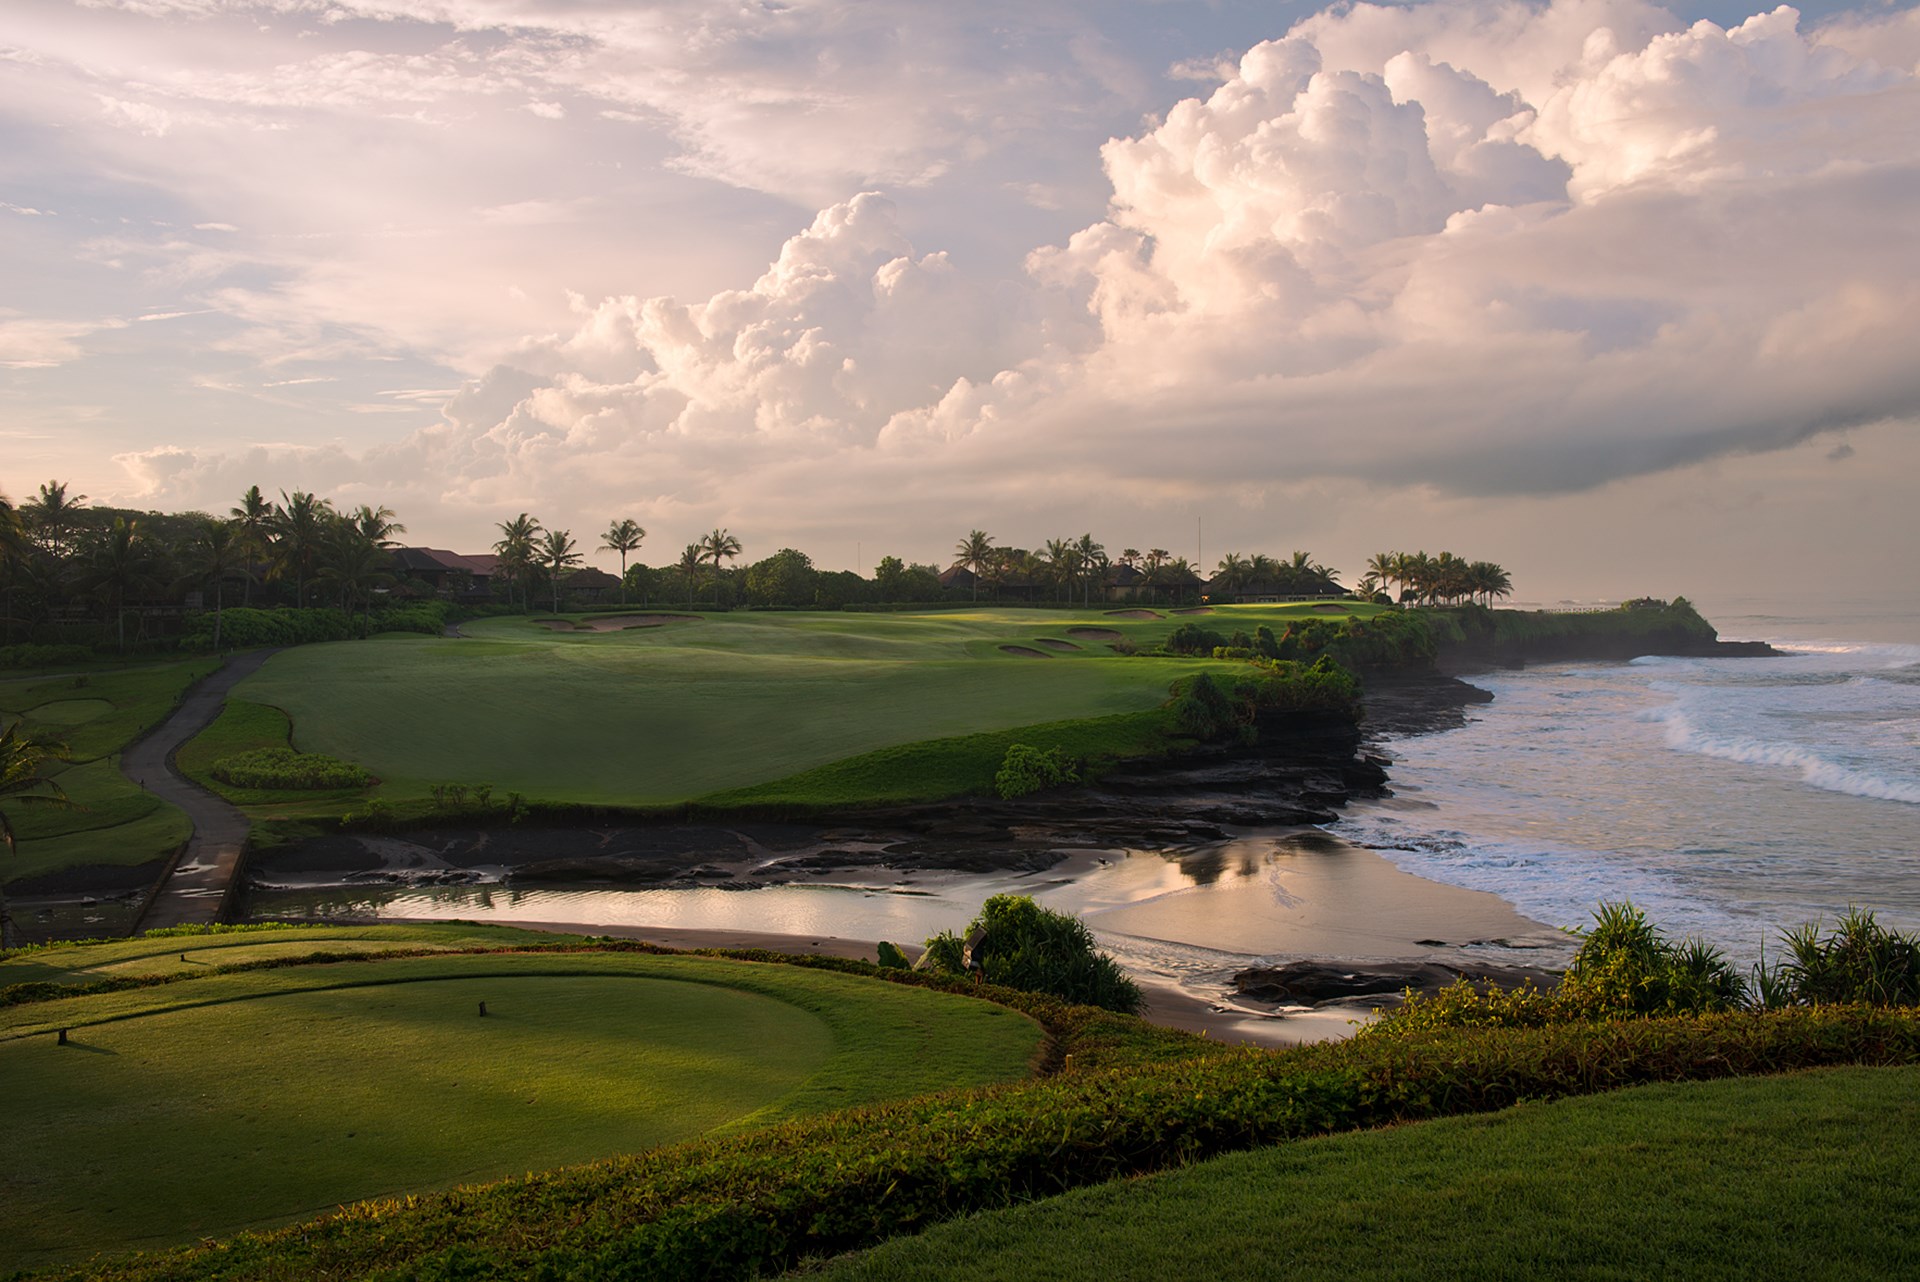  Nirwana  Bali  Golf Course is one of Bali  s most beautiful 